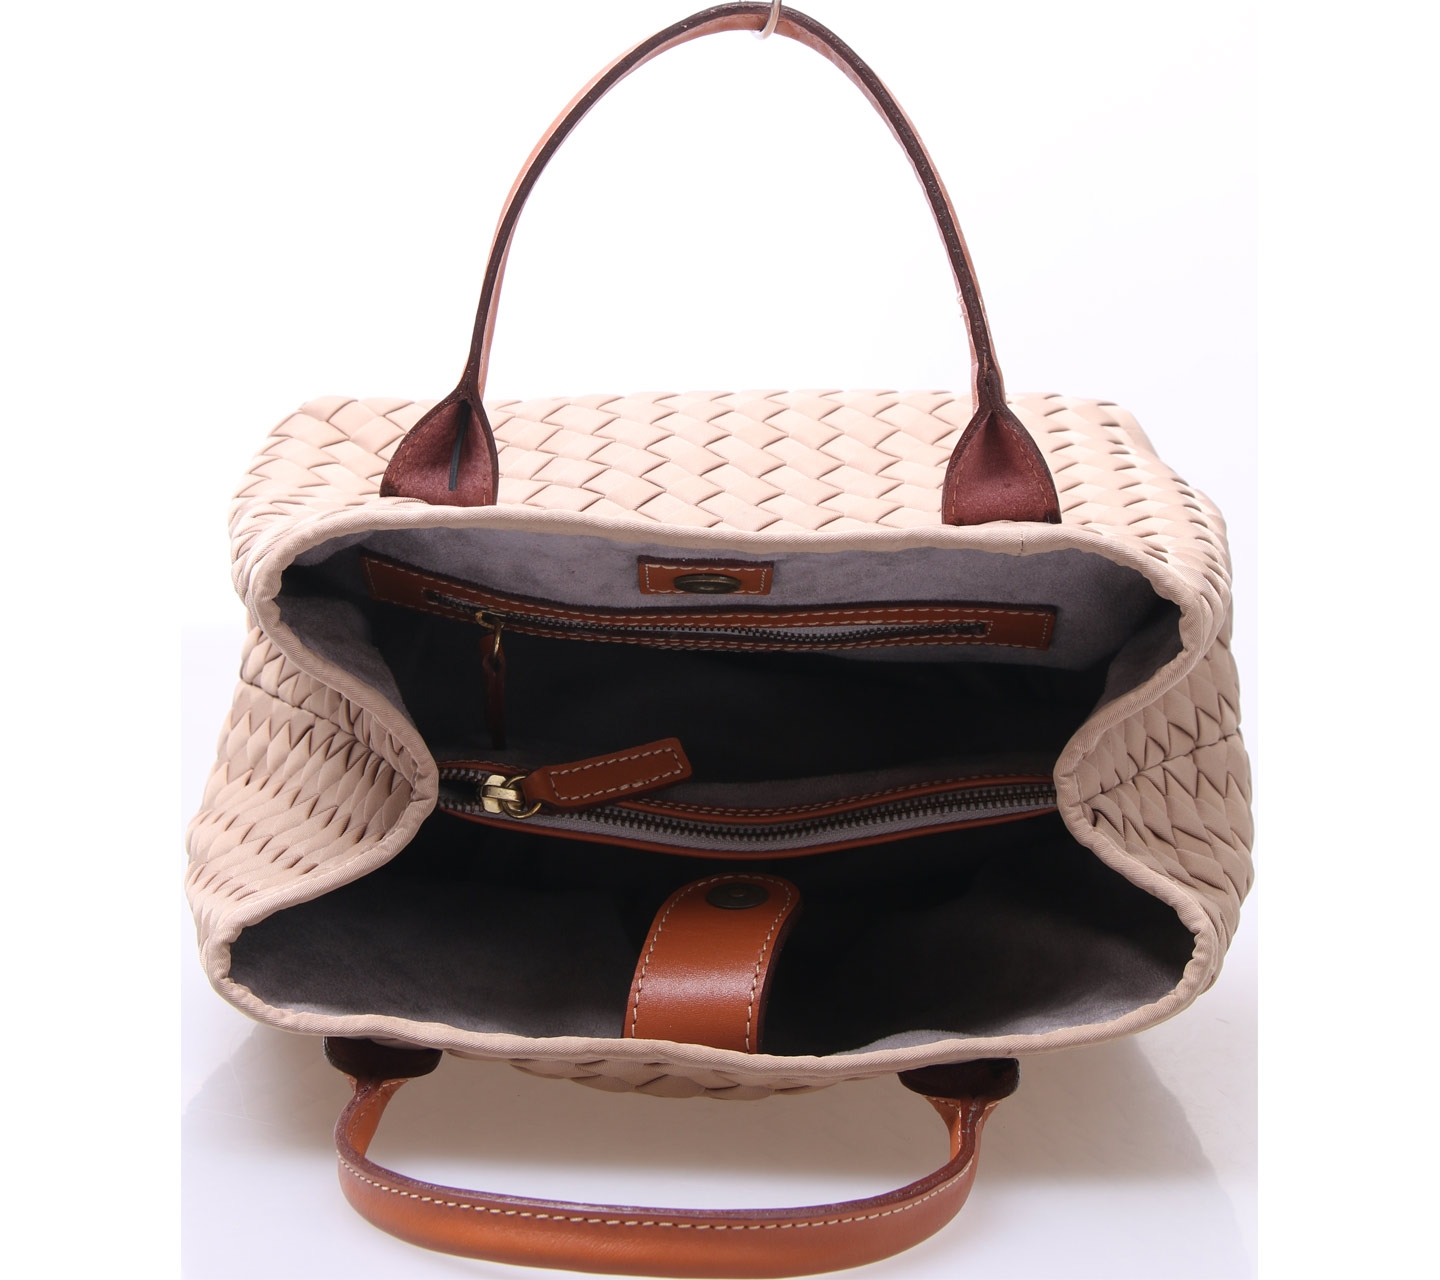 Webe Light Brown Handbag